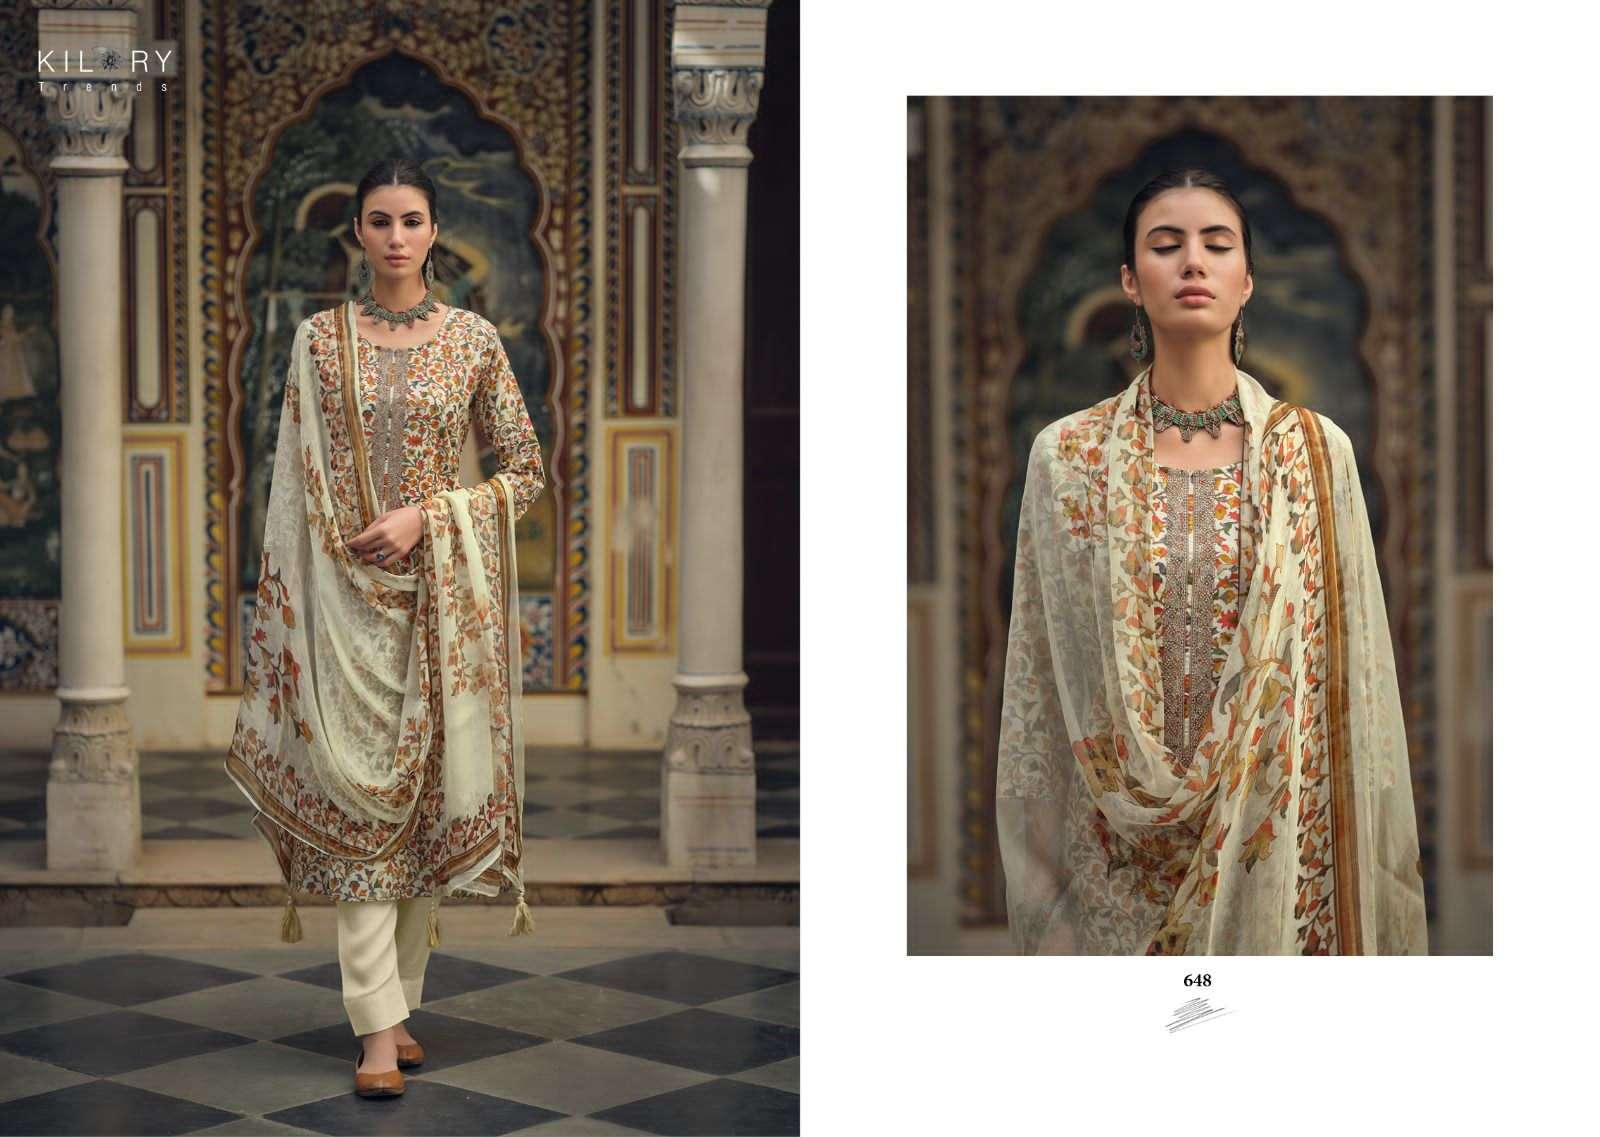 kilory trends tesoro 641-648 series trendy designer salwar kameez catalogue summer collection 2023 